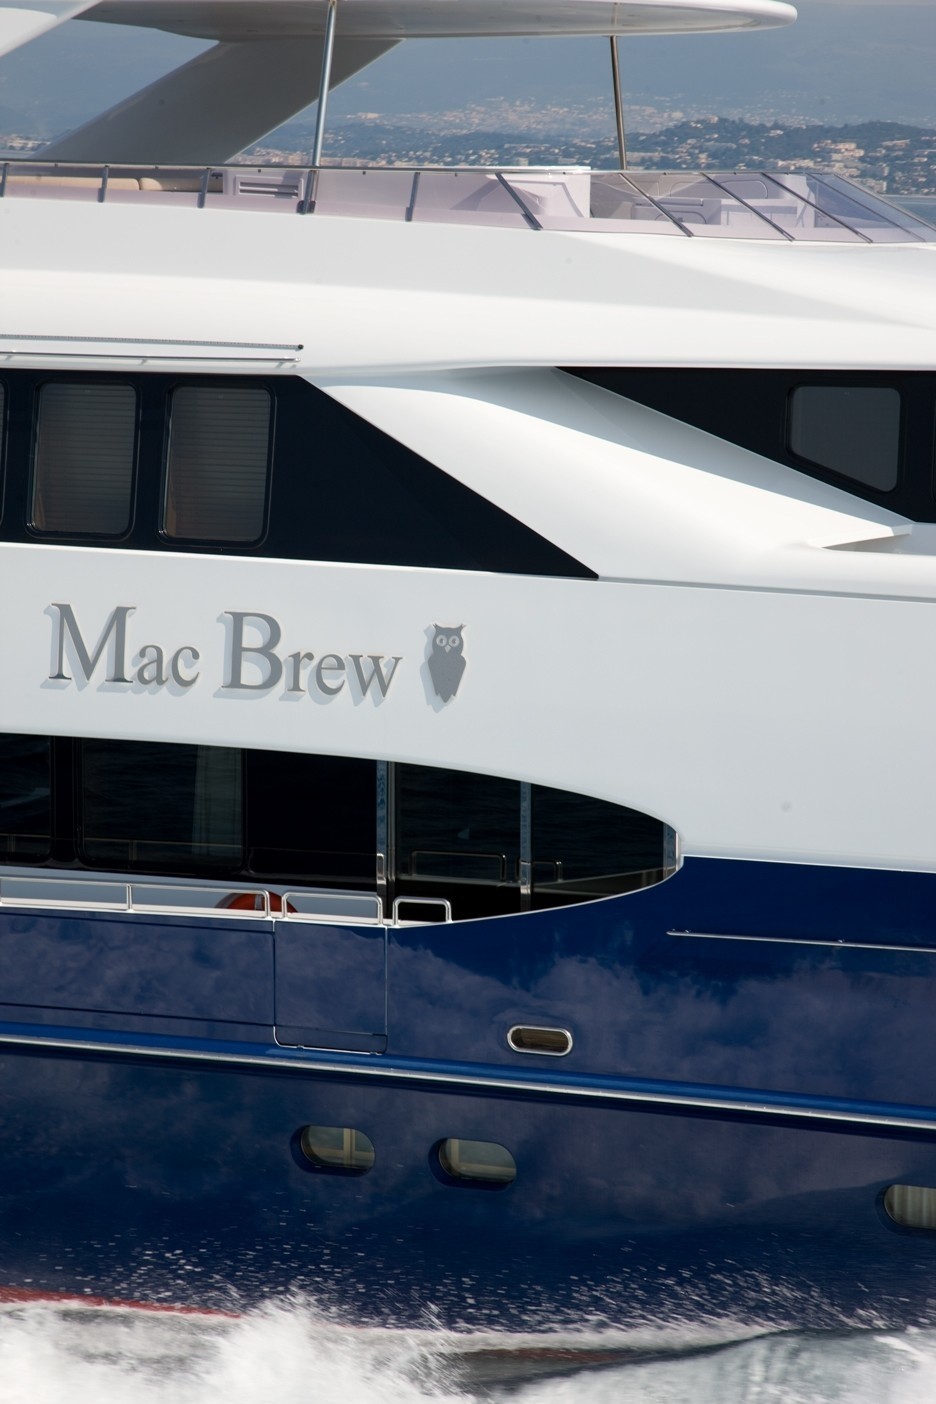 The 40m Yacht MAC BREW